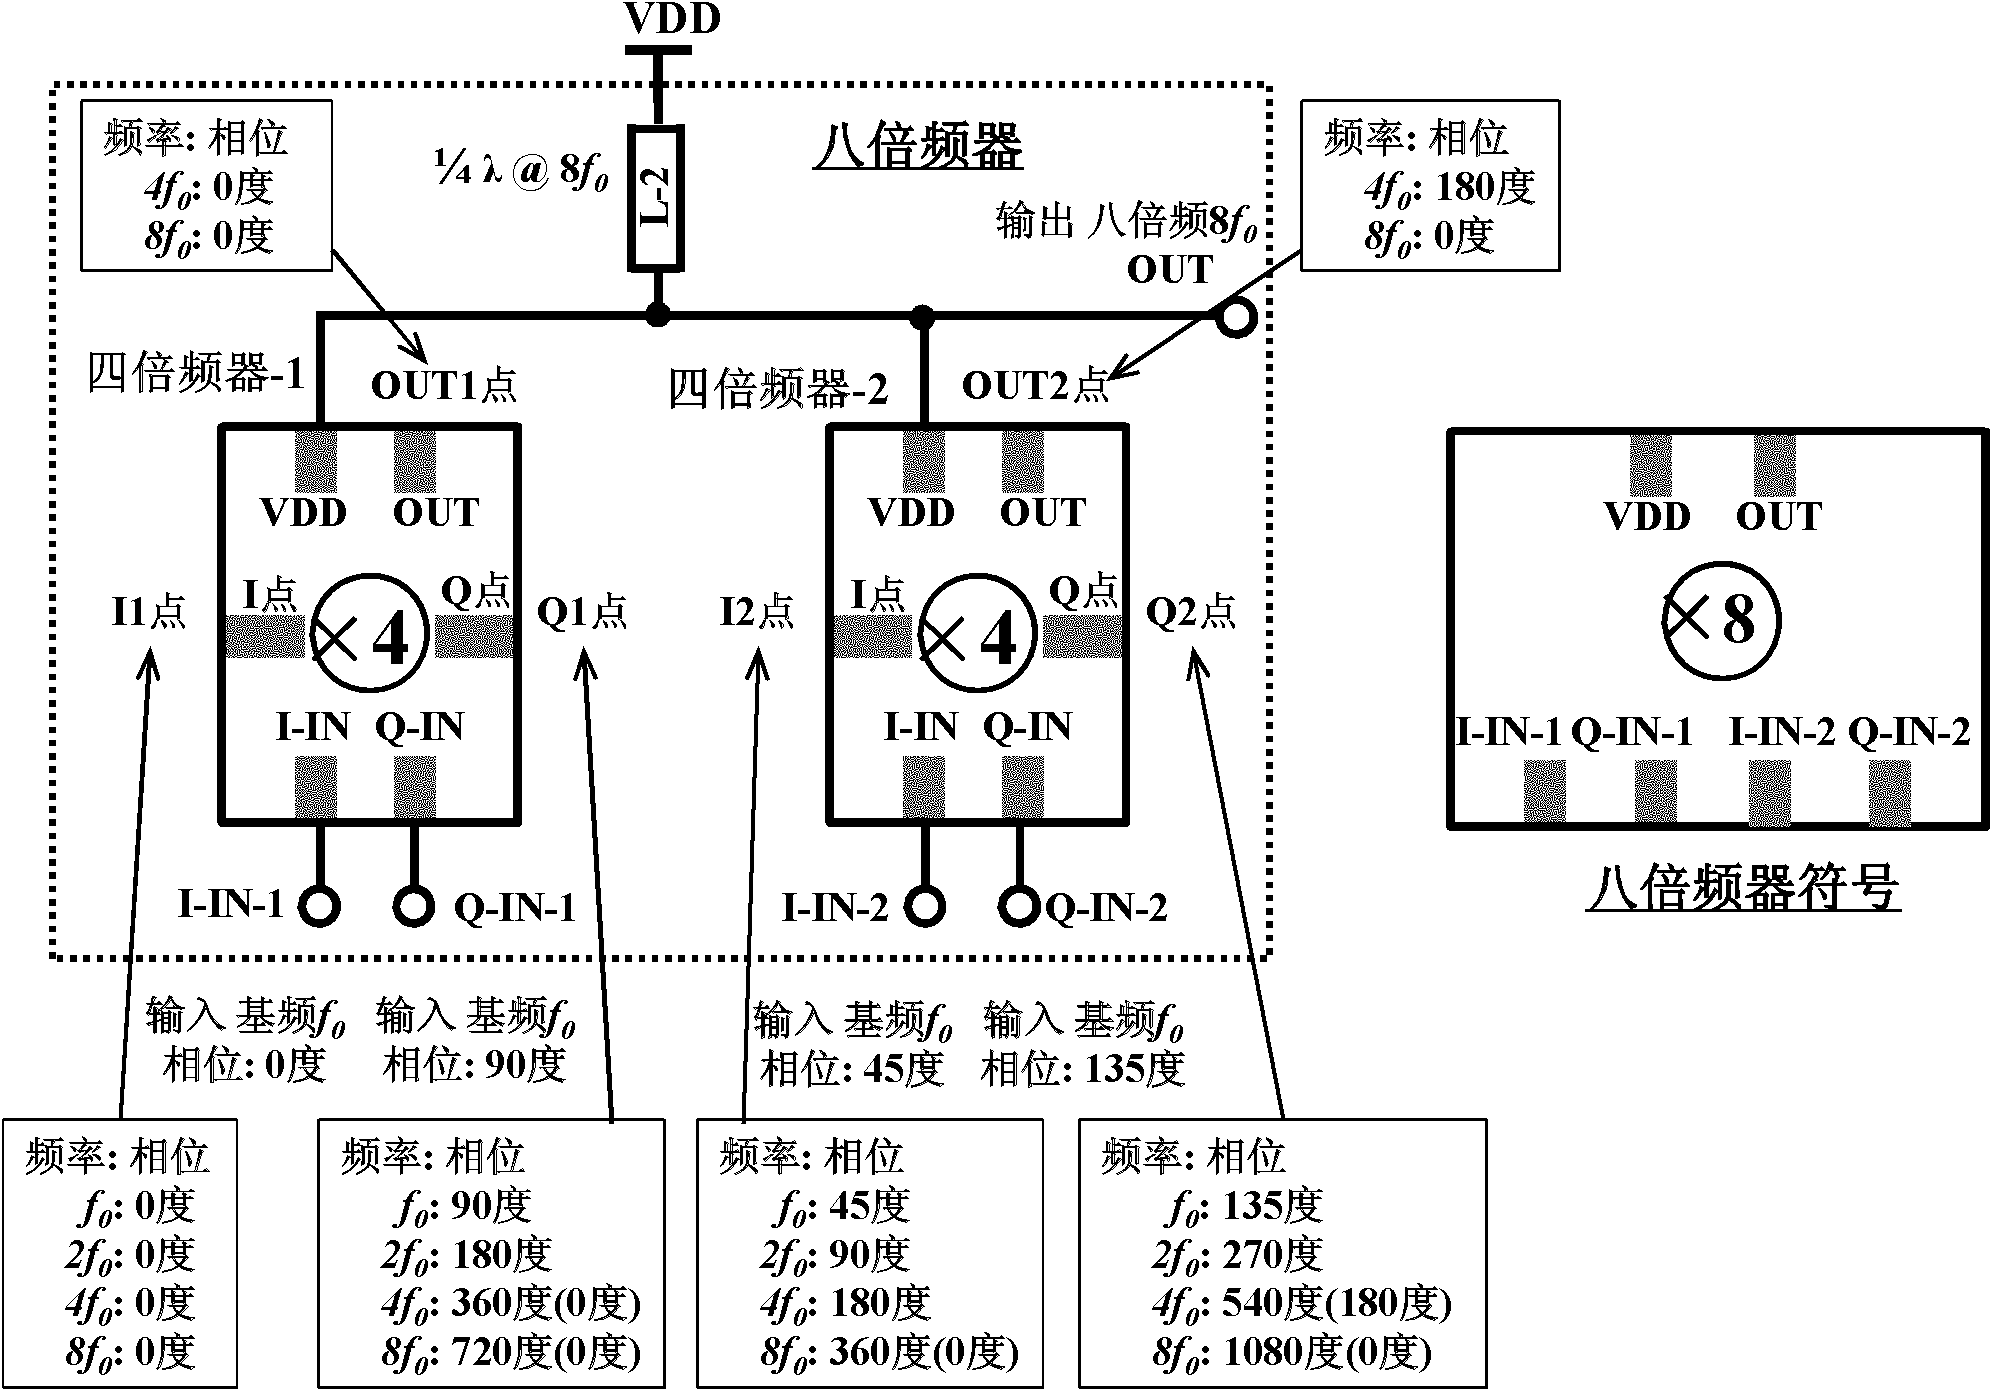 Tera-hertz silica-based quadrupler and frequency multiplier